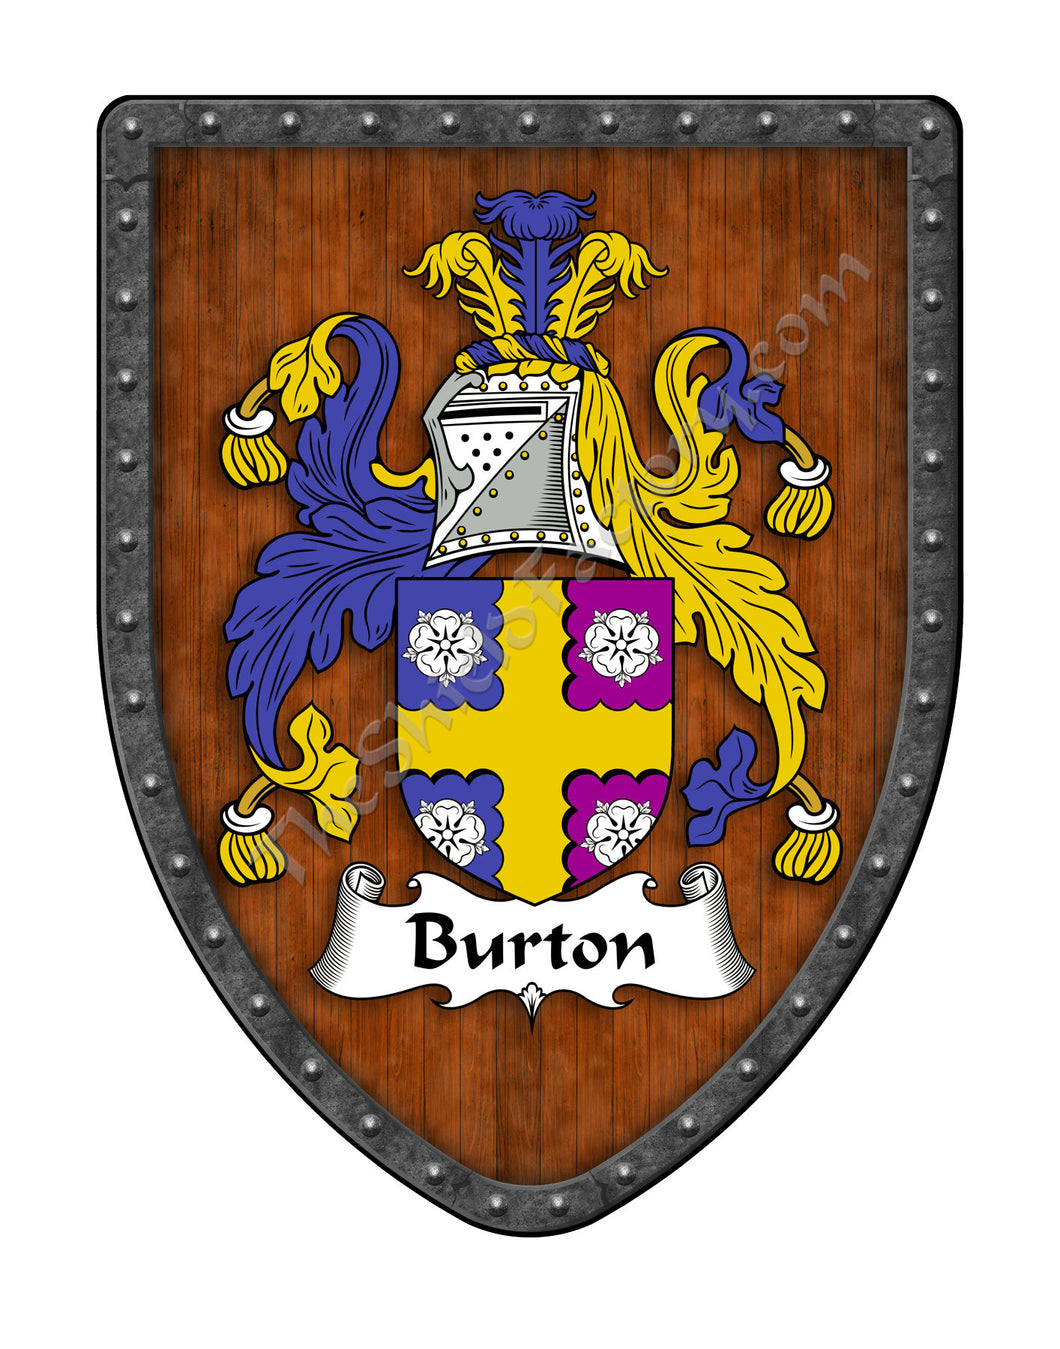 Burton Coat of Arms Family Crest